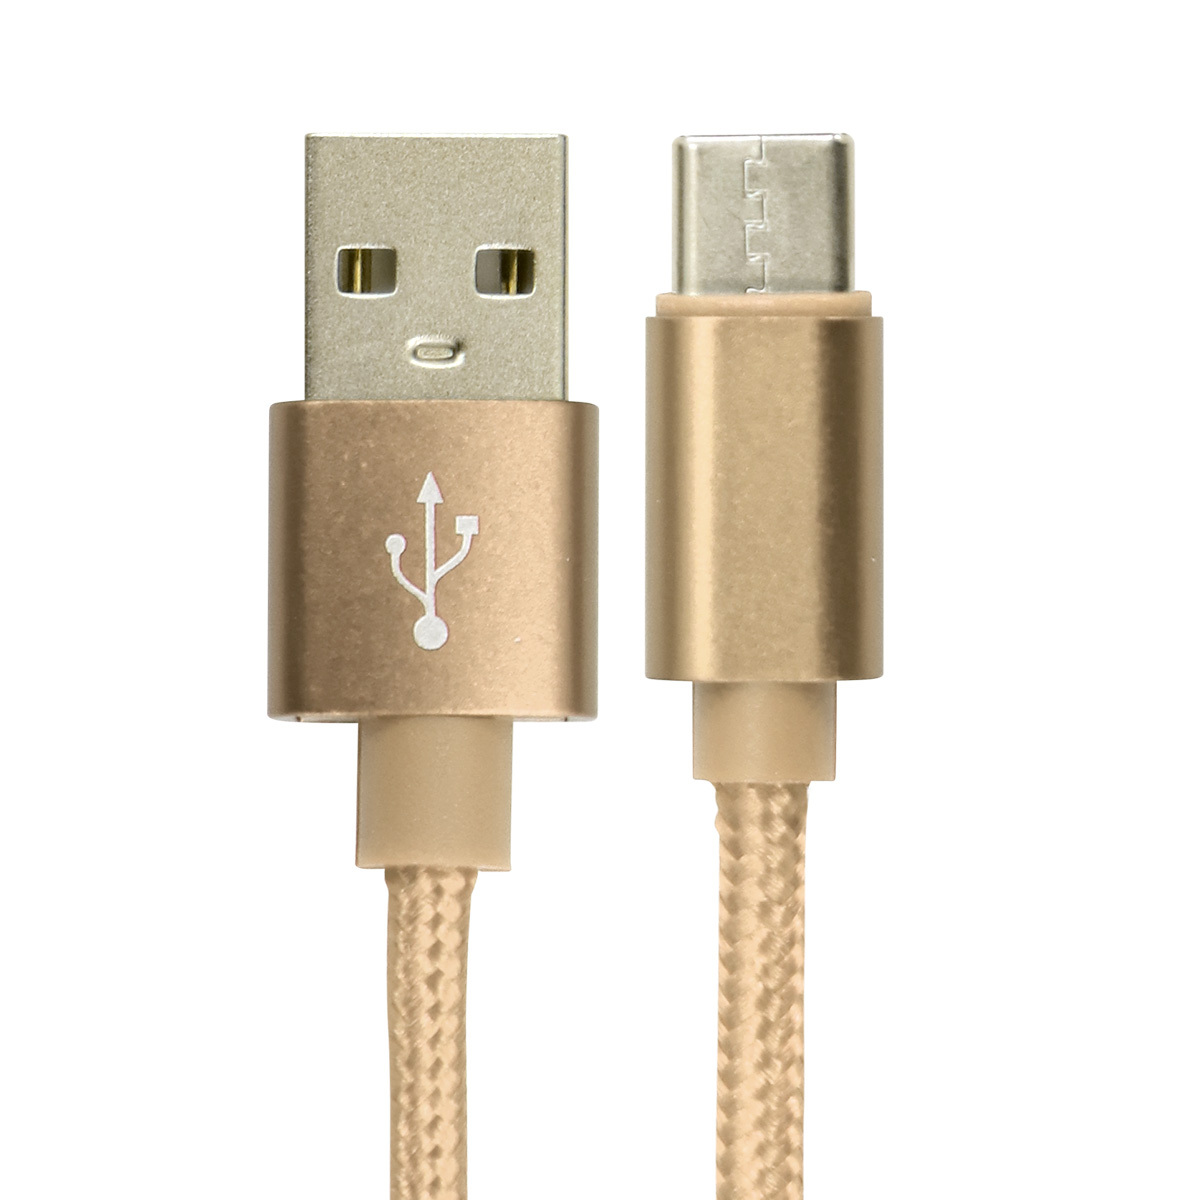 USB Type-C 充電ケーブル 長さ3m 急速充電 強化素材 データ転送 type-c Android USB ケーブル iPhone タイプC 充電 コード 充電器 追跡可能 TYPEC タイプシー